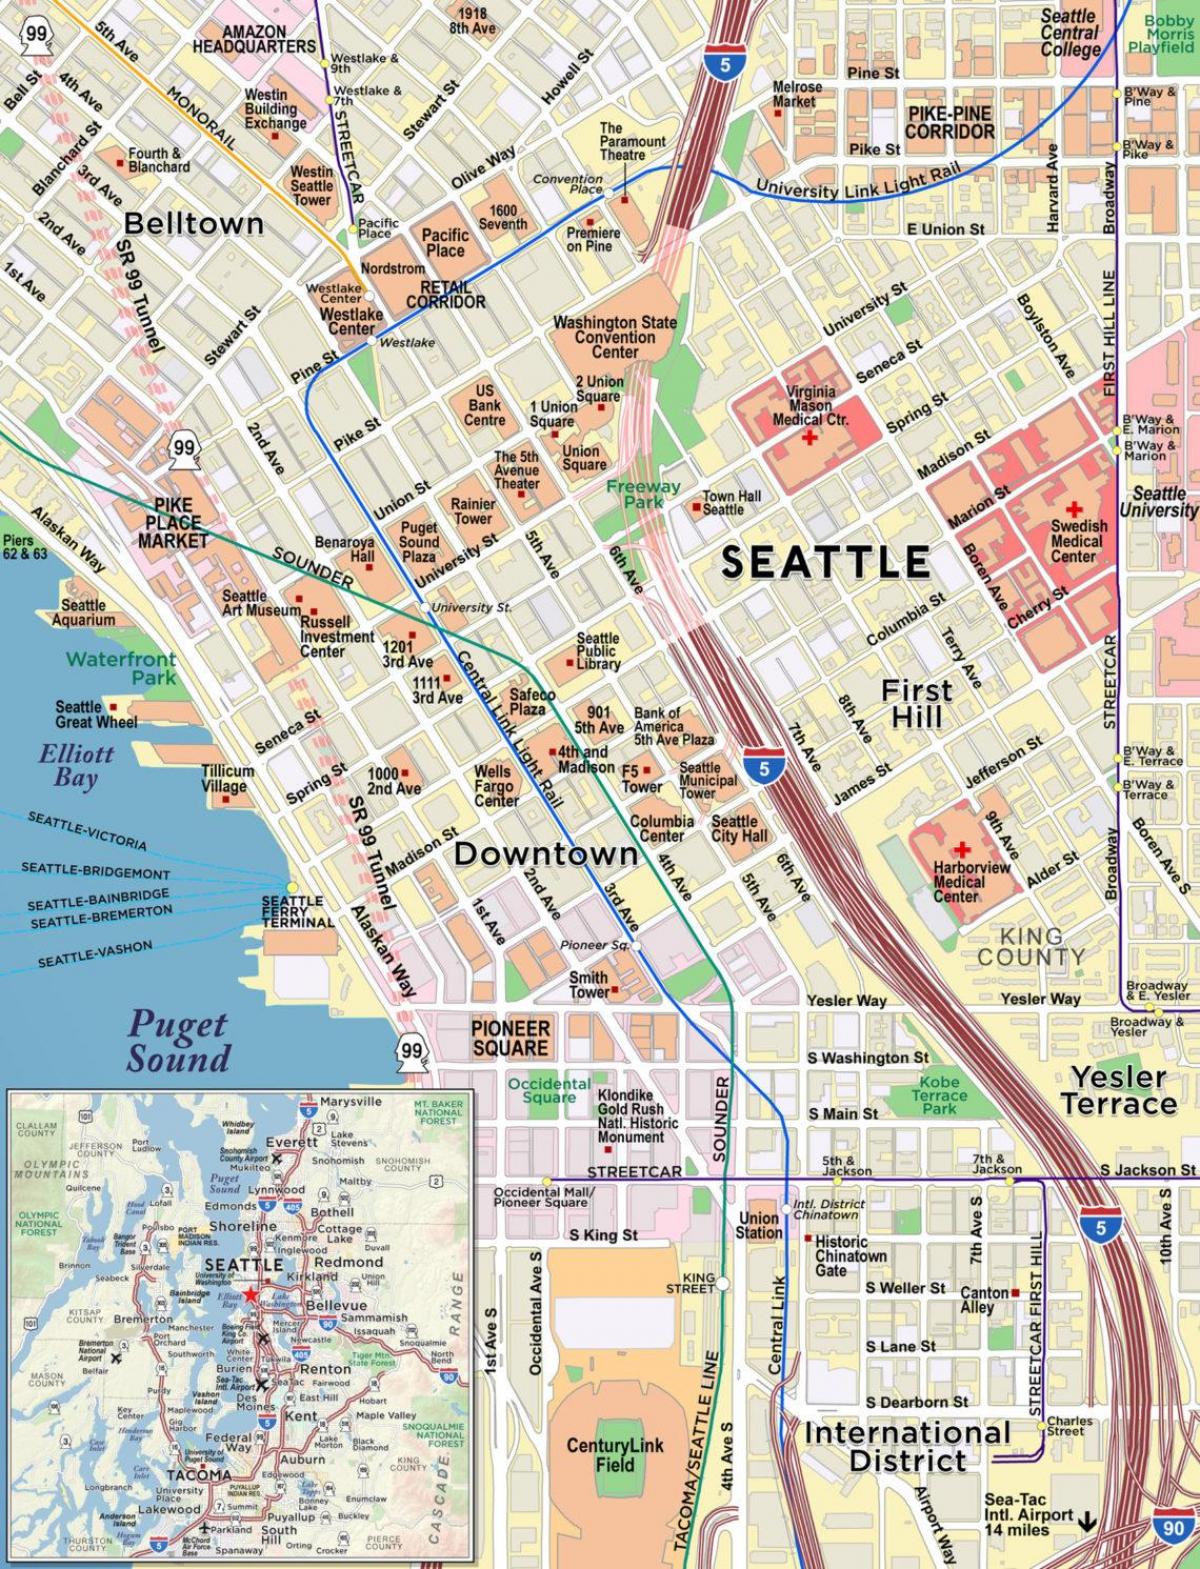 Seattle city center map